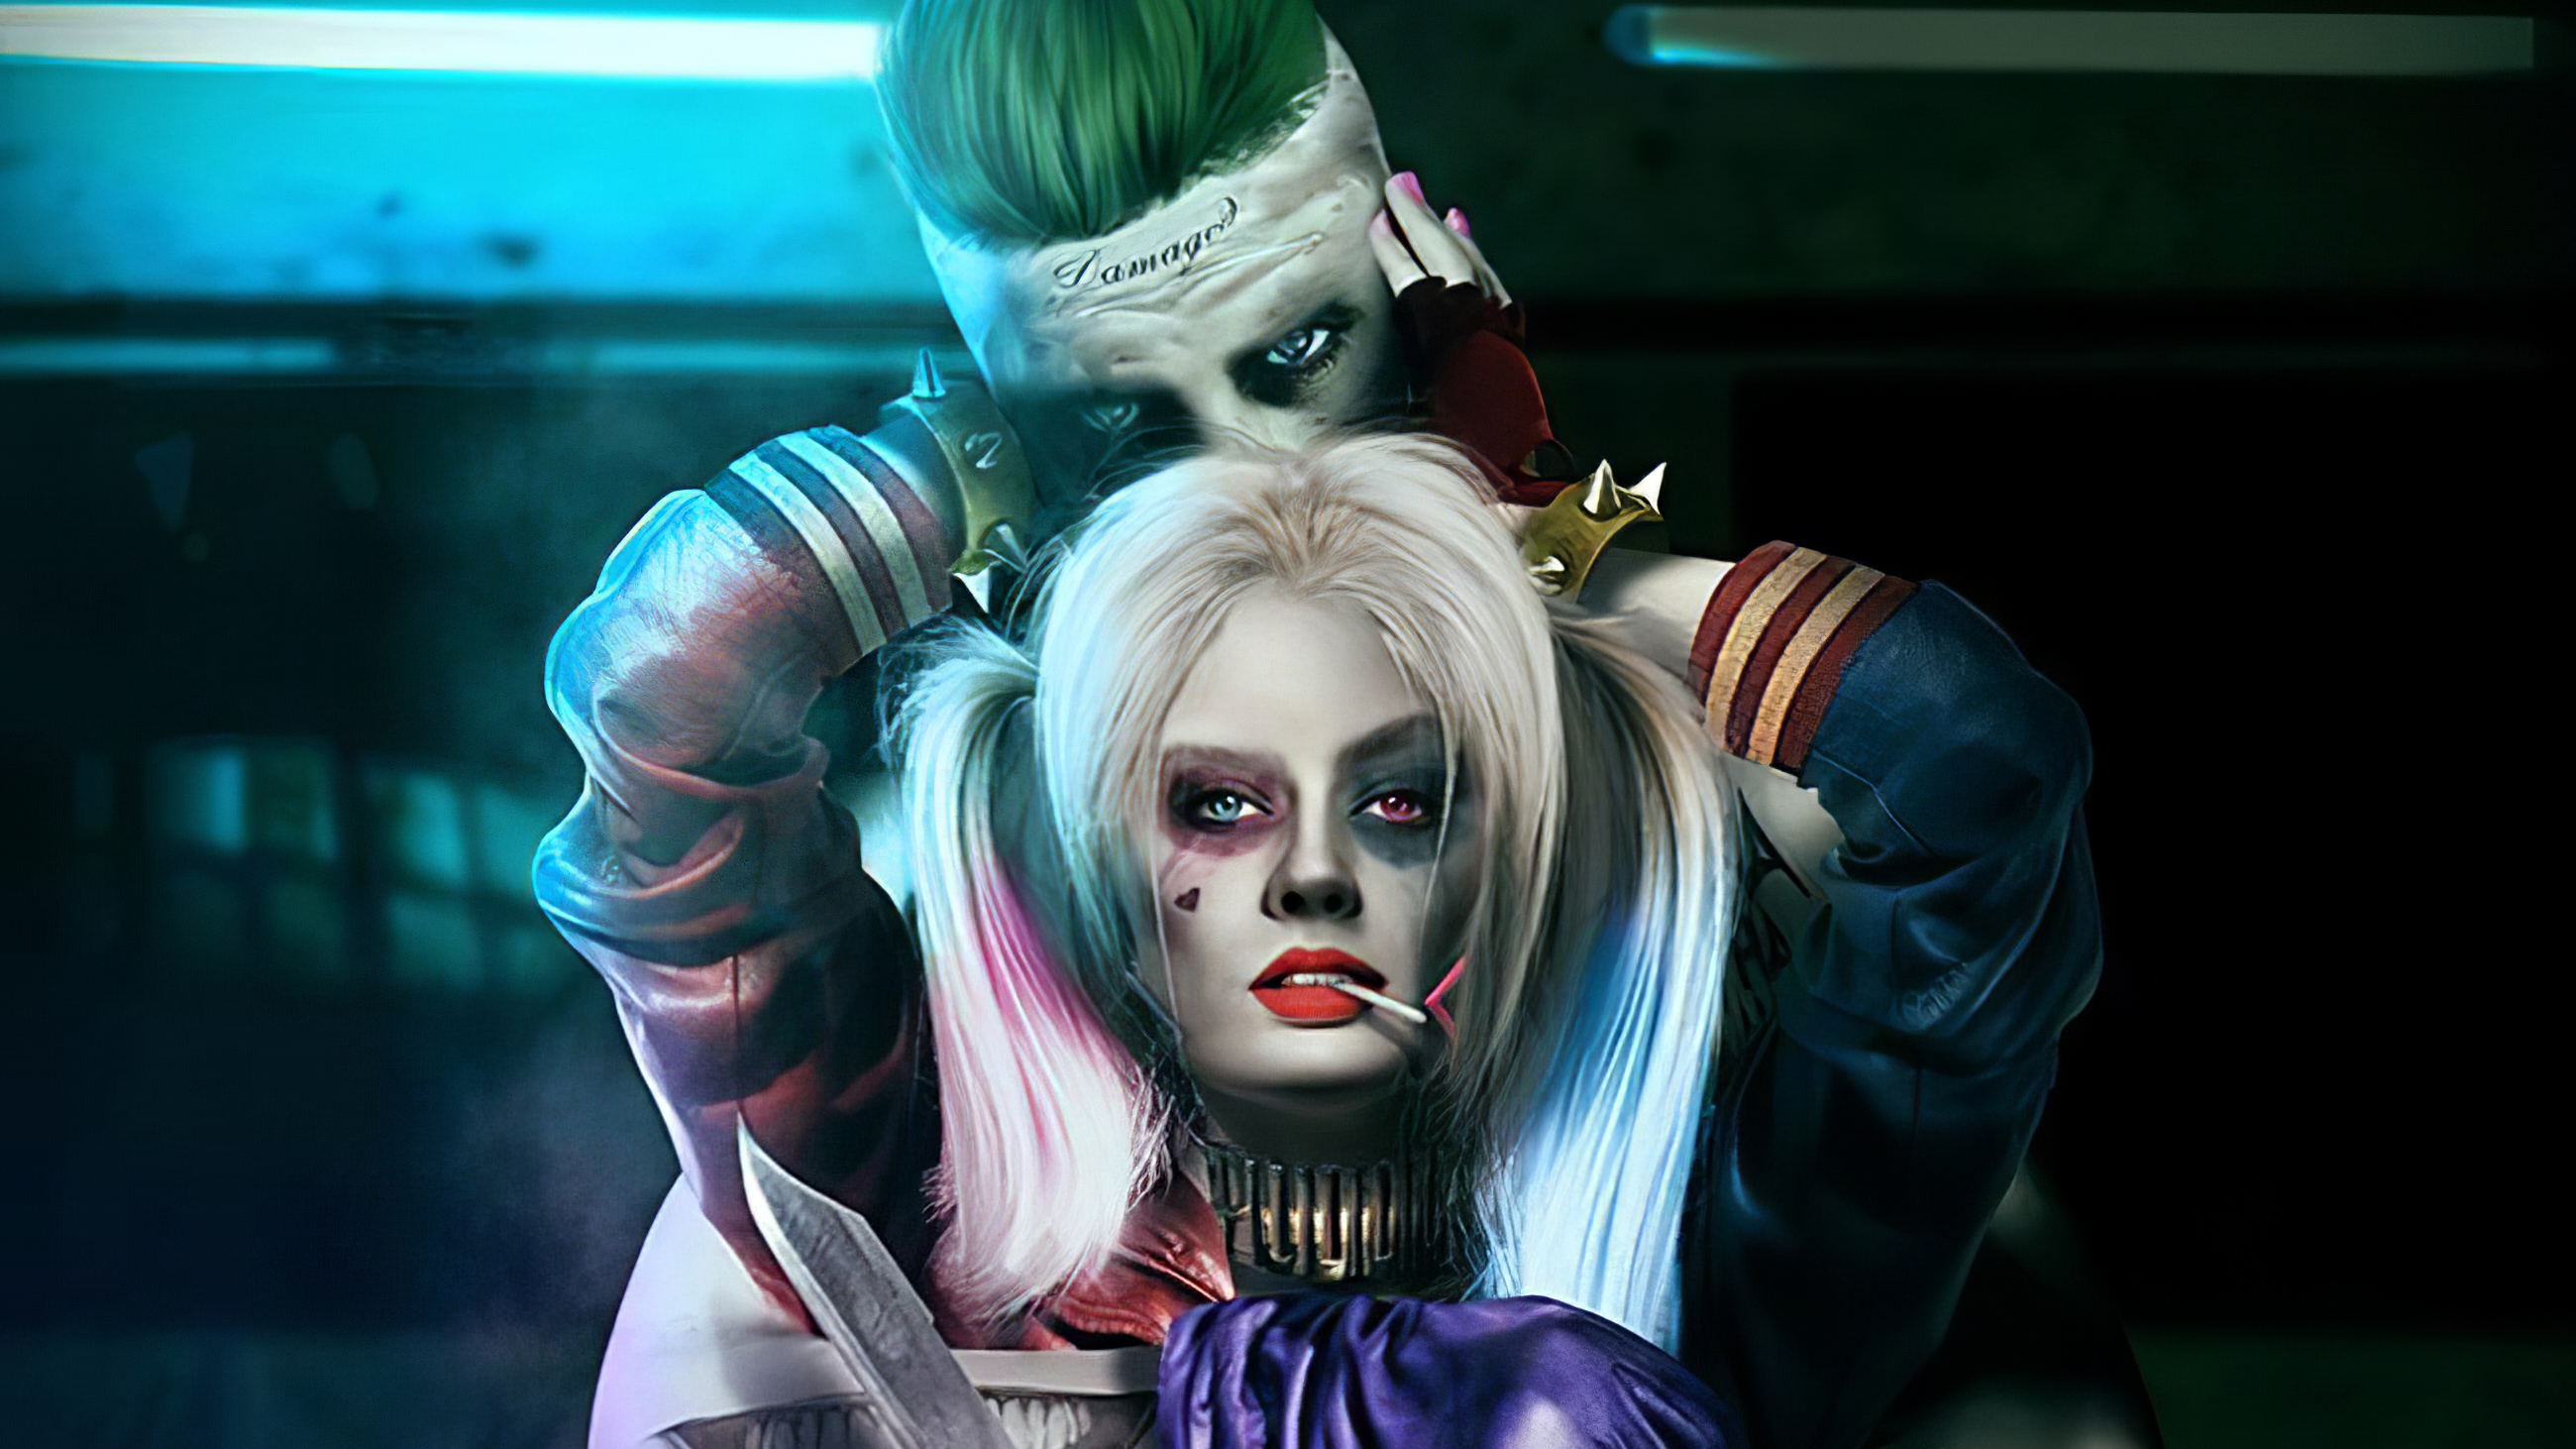 Harley Quinn And Joker Wallpaper Hd  Wallpapers13com